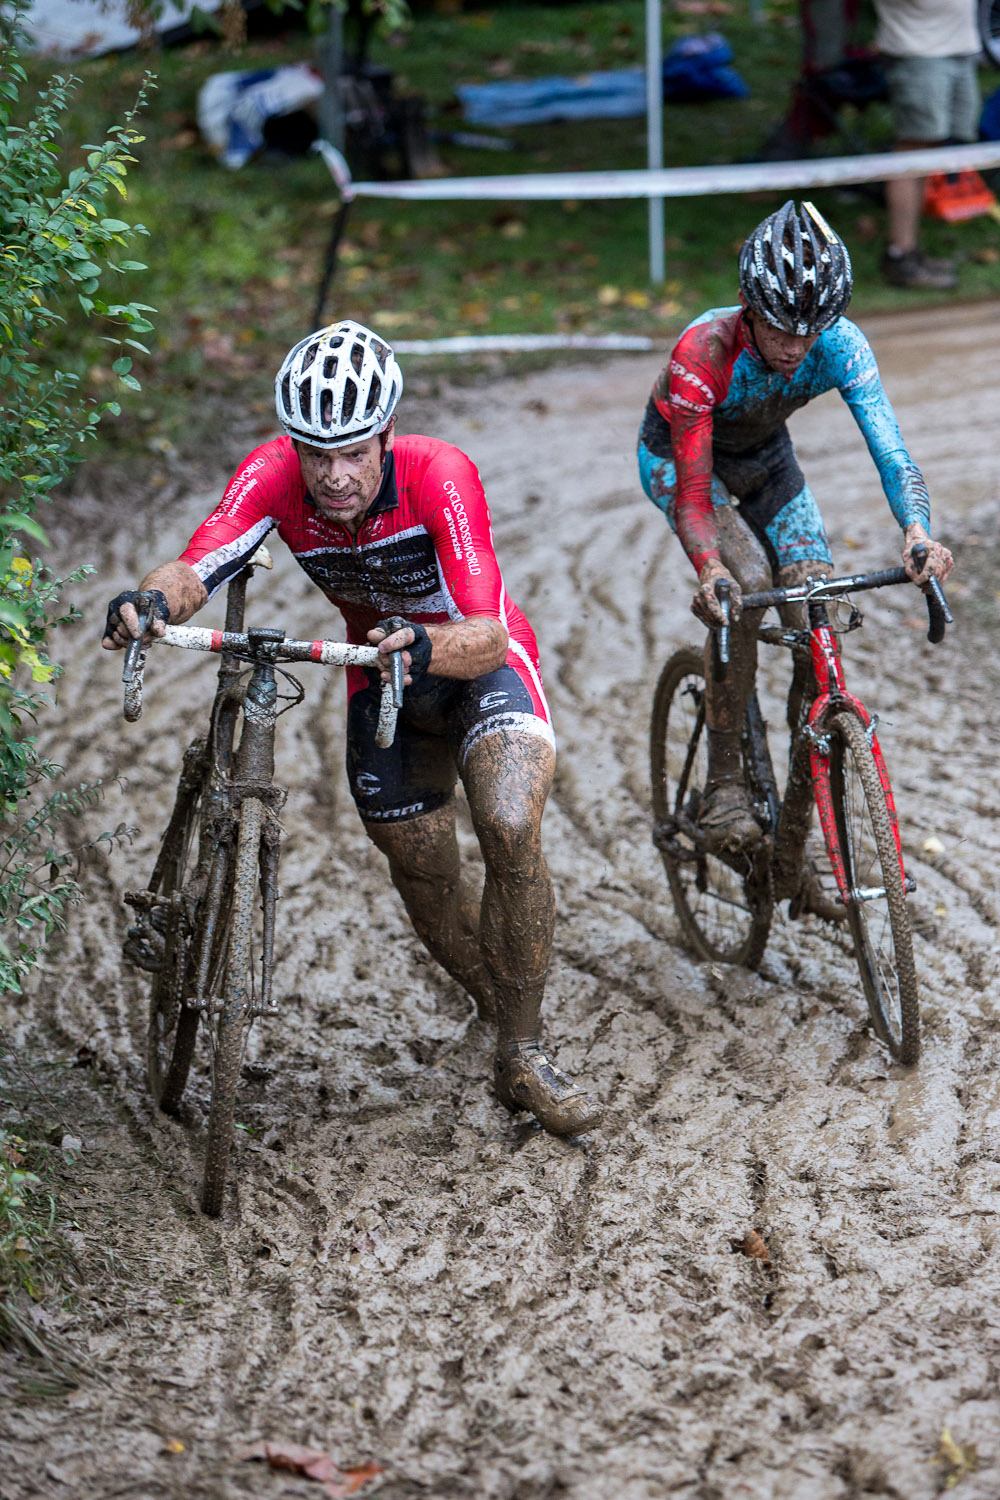 Messer runs through the mud while Petrovrides. © Kent Baumgardt